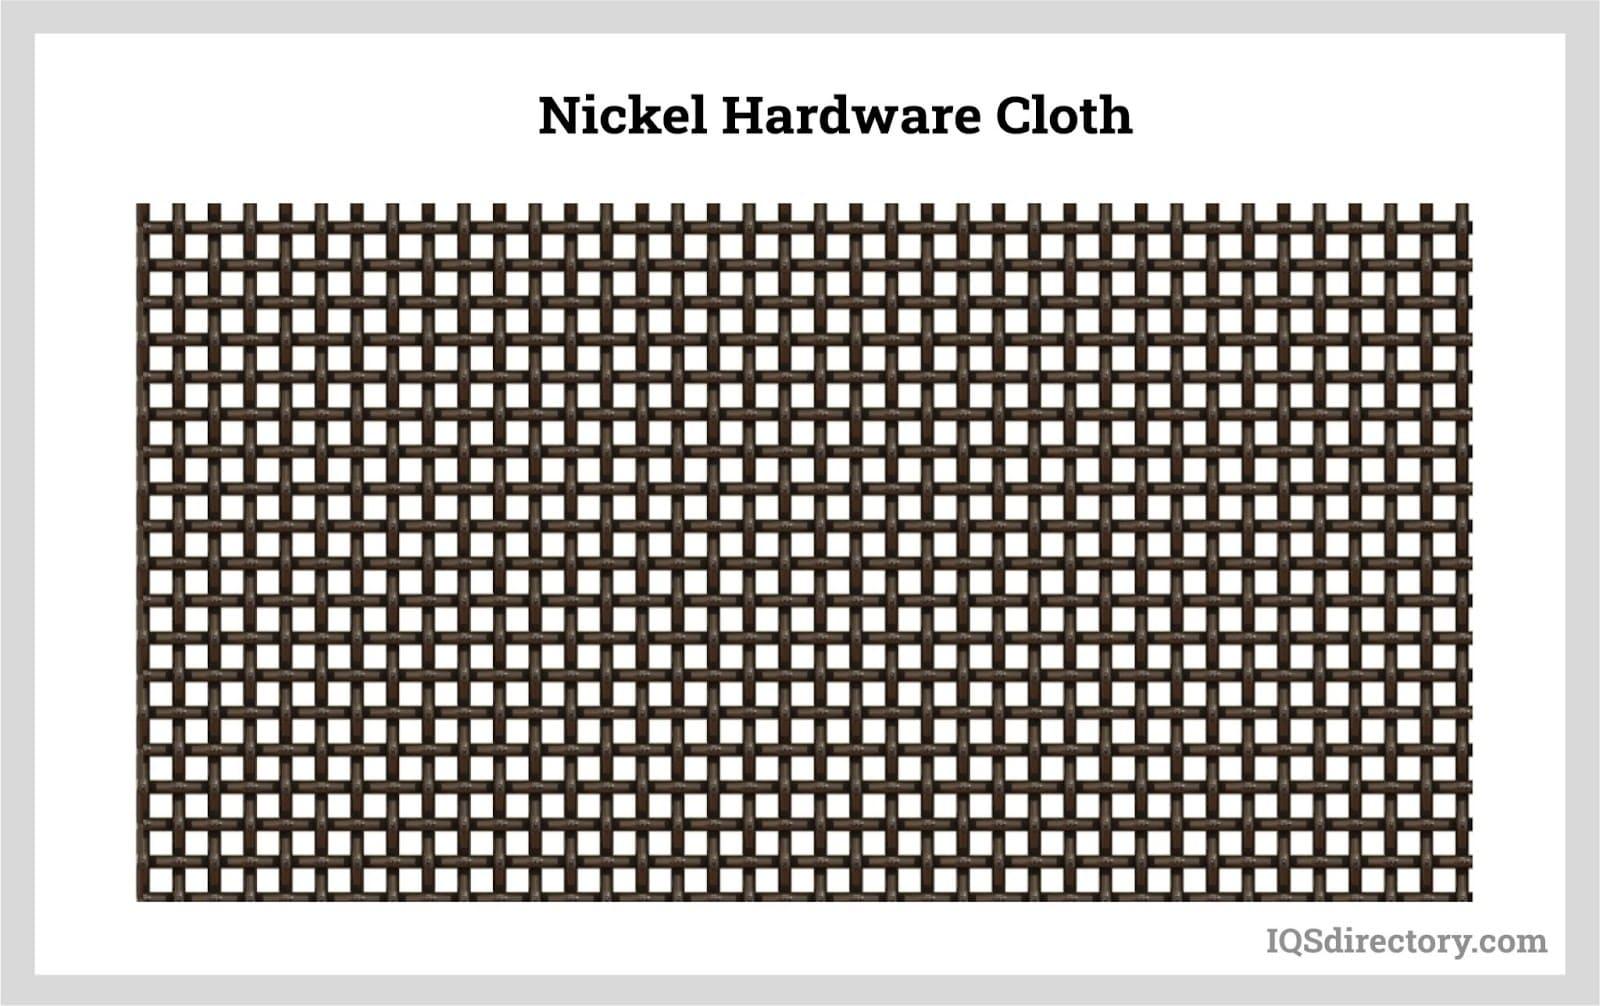 Nickel Hardware Cloth